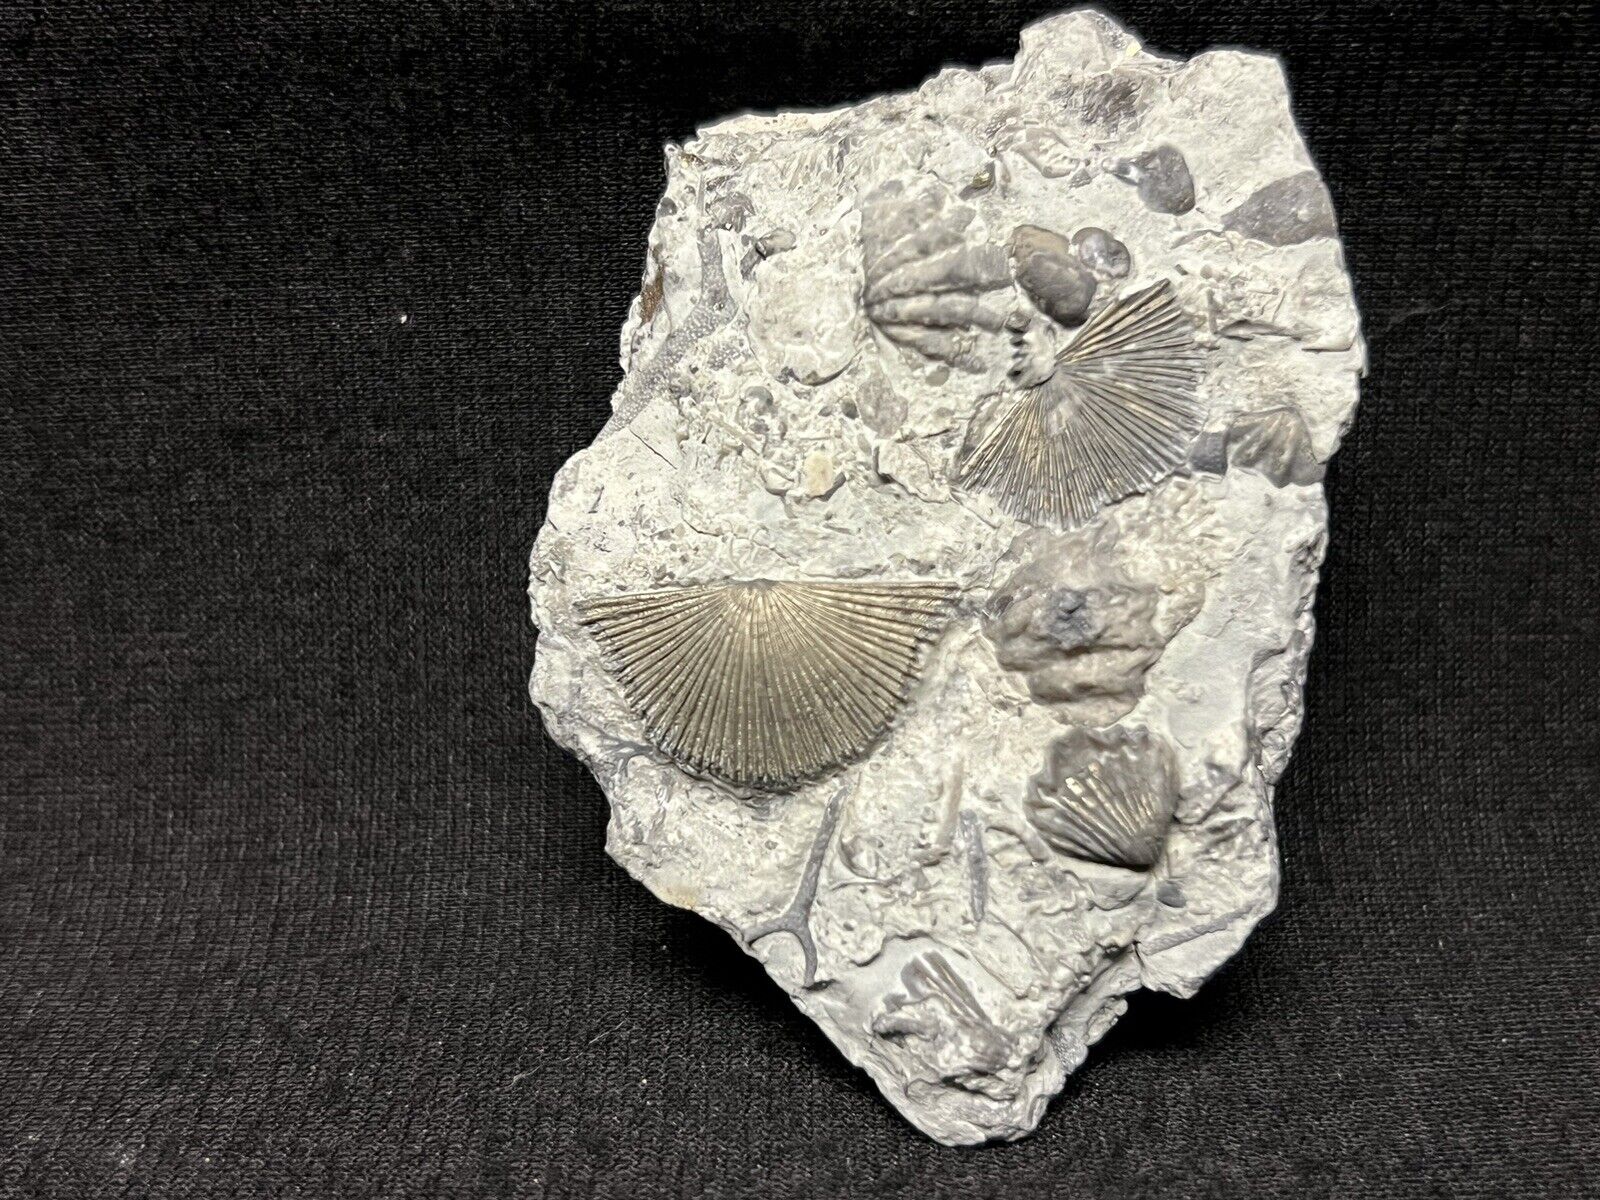 Gorgeous Pyritized Brachiopod from Indiana. Fossil Trilobite Crinoid